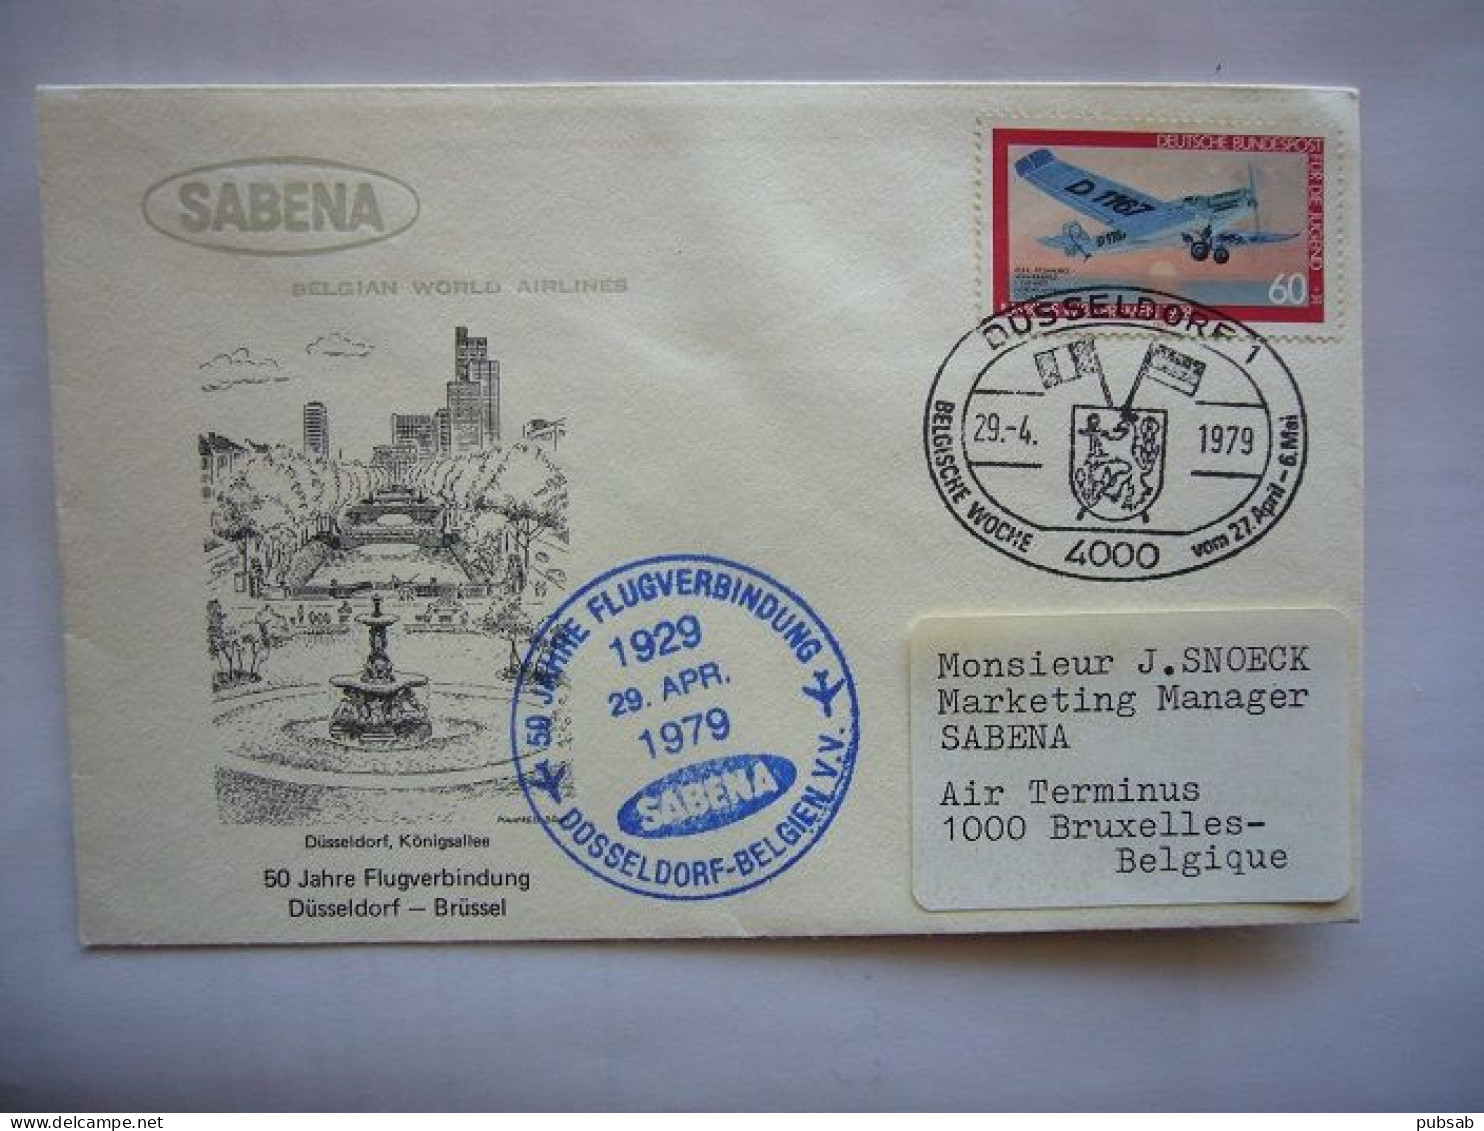 Avion / Airplane / SABENA / First Flight Düsseldorf - Brussel / Apr 29,79 / Stamp Junkers F13 - Covers & Documents